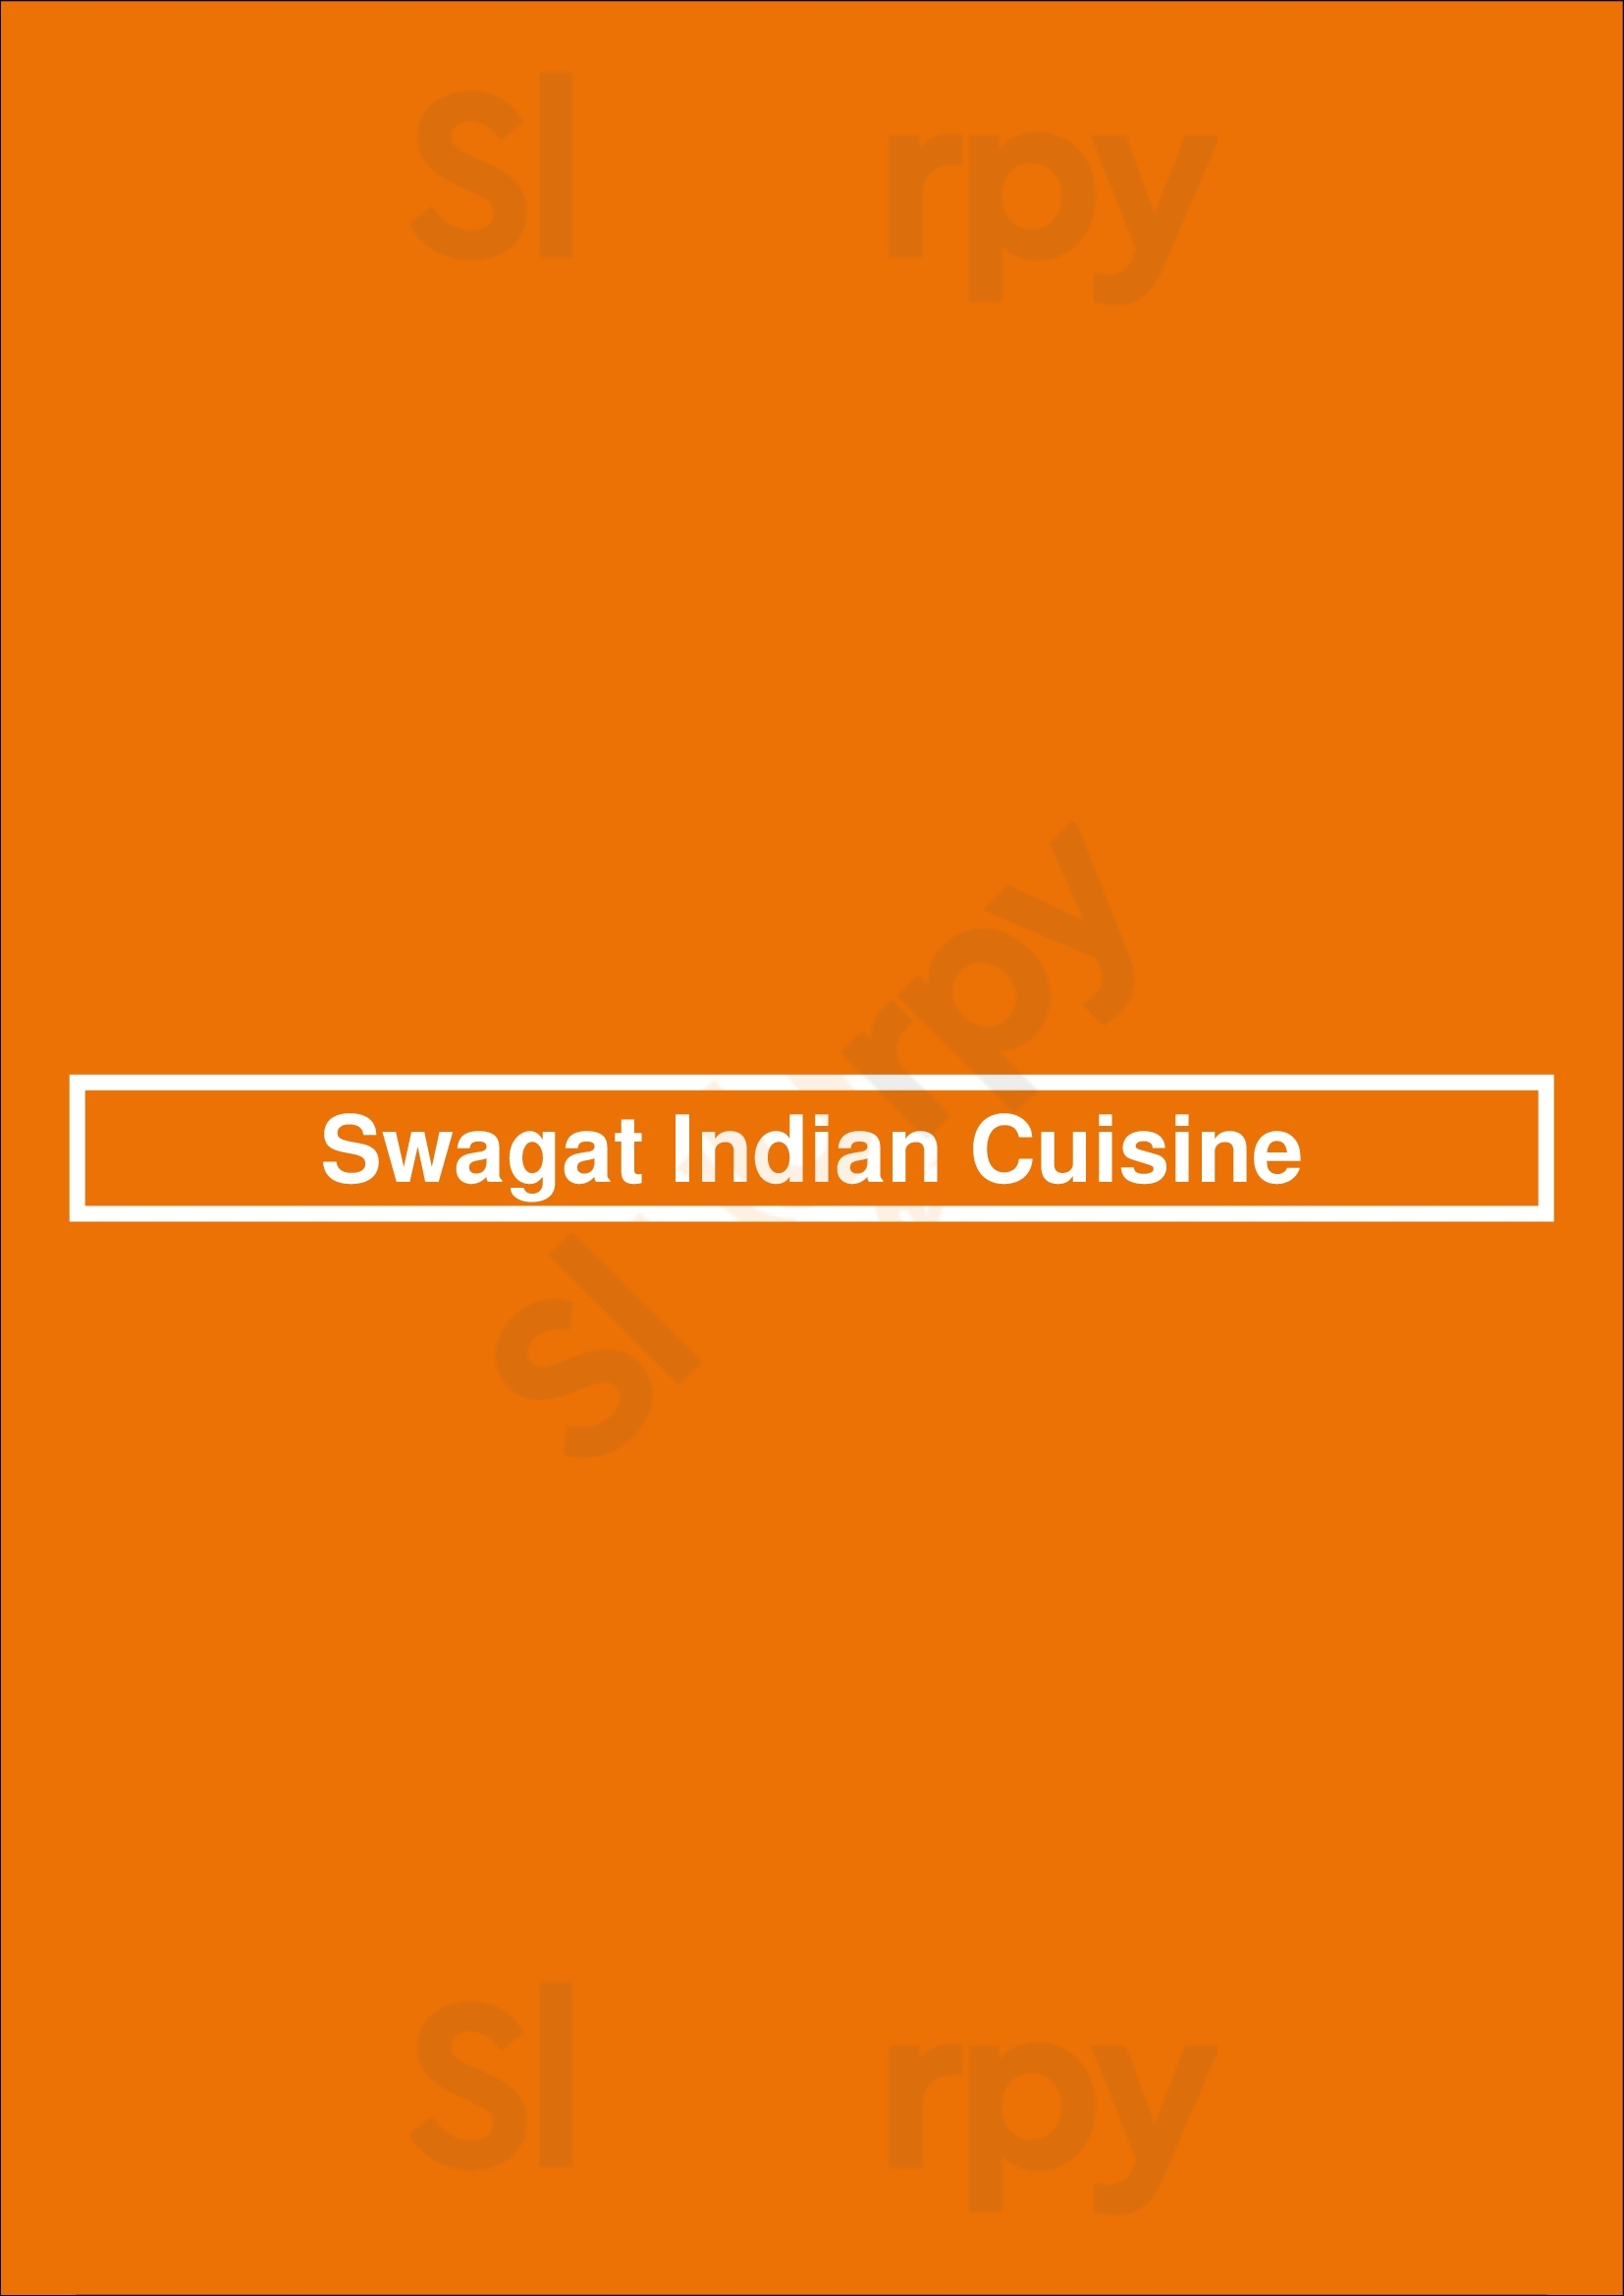 Swagat Indian Cuisine New York City Menu - 1